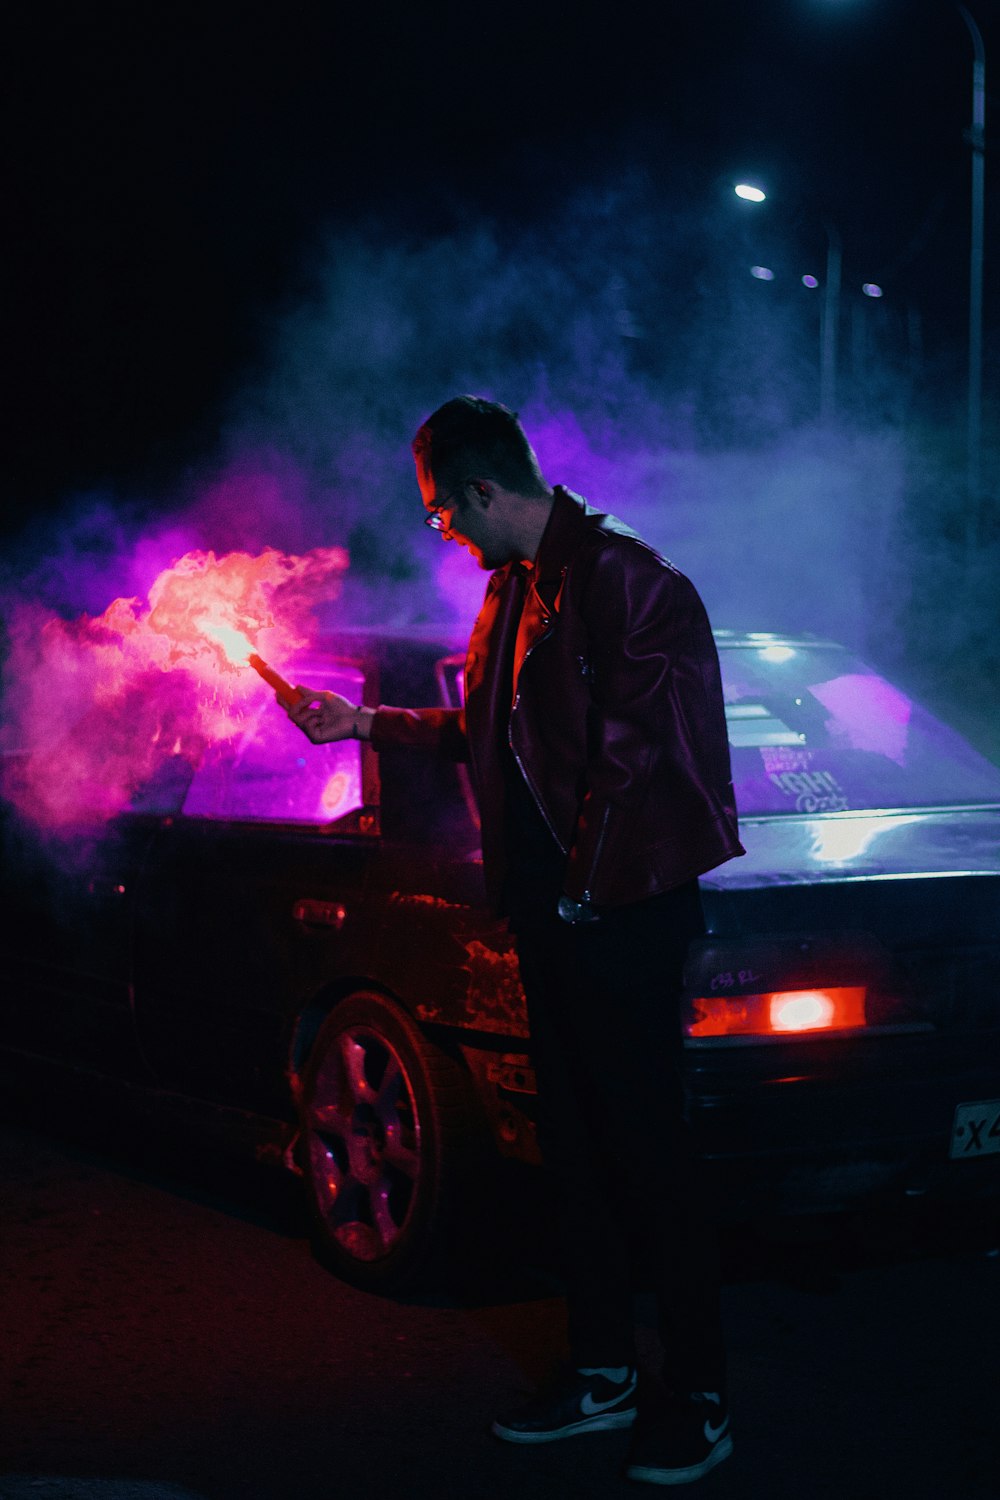 a man standing next to a car on fire